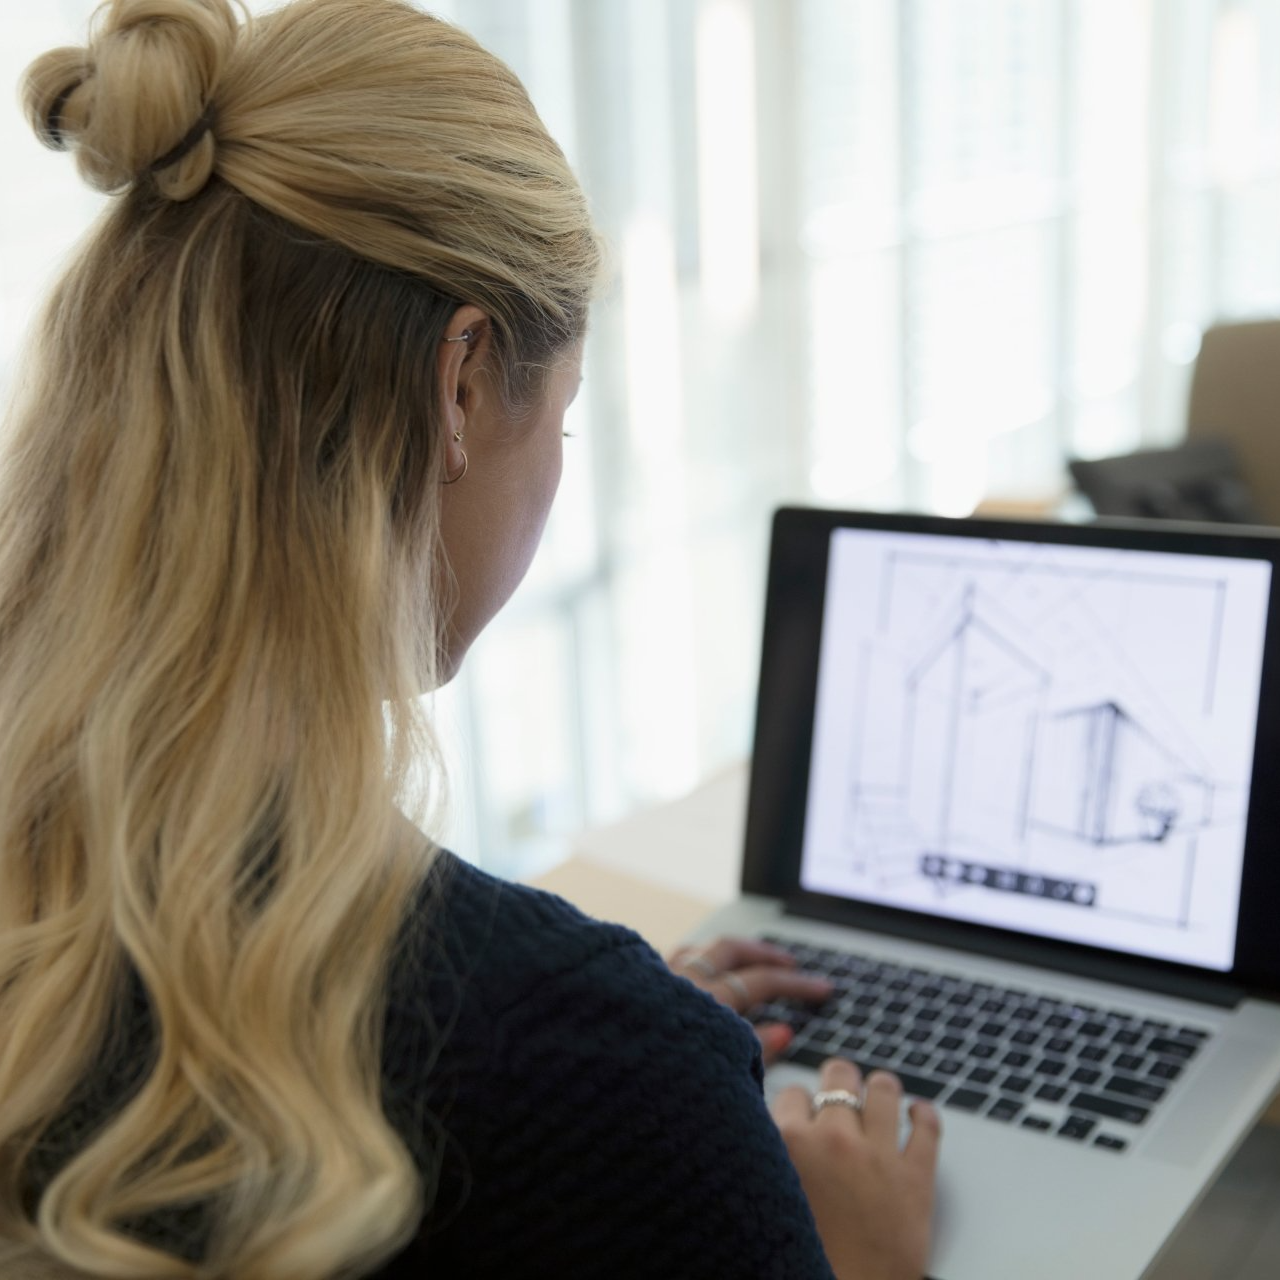 Blonde, female architect viewing digital blueprints on laptop